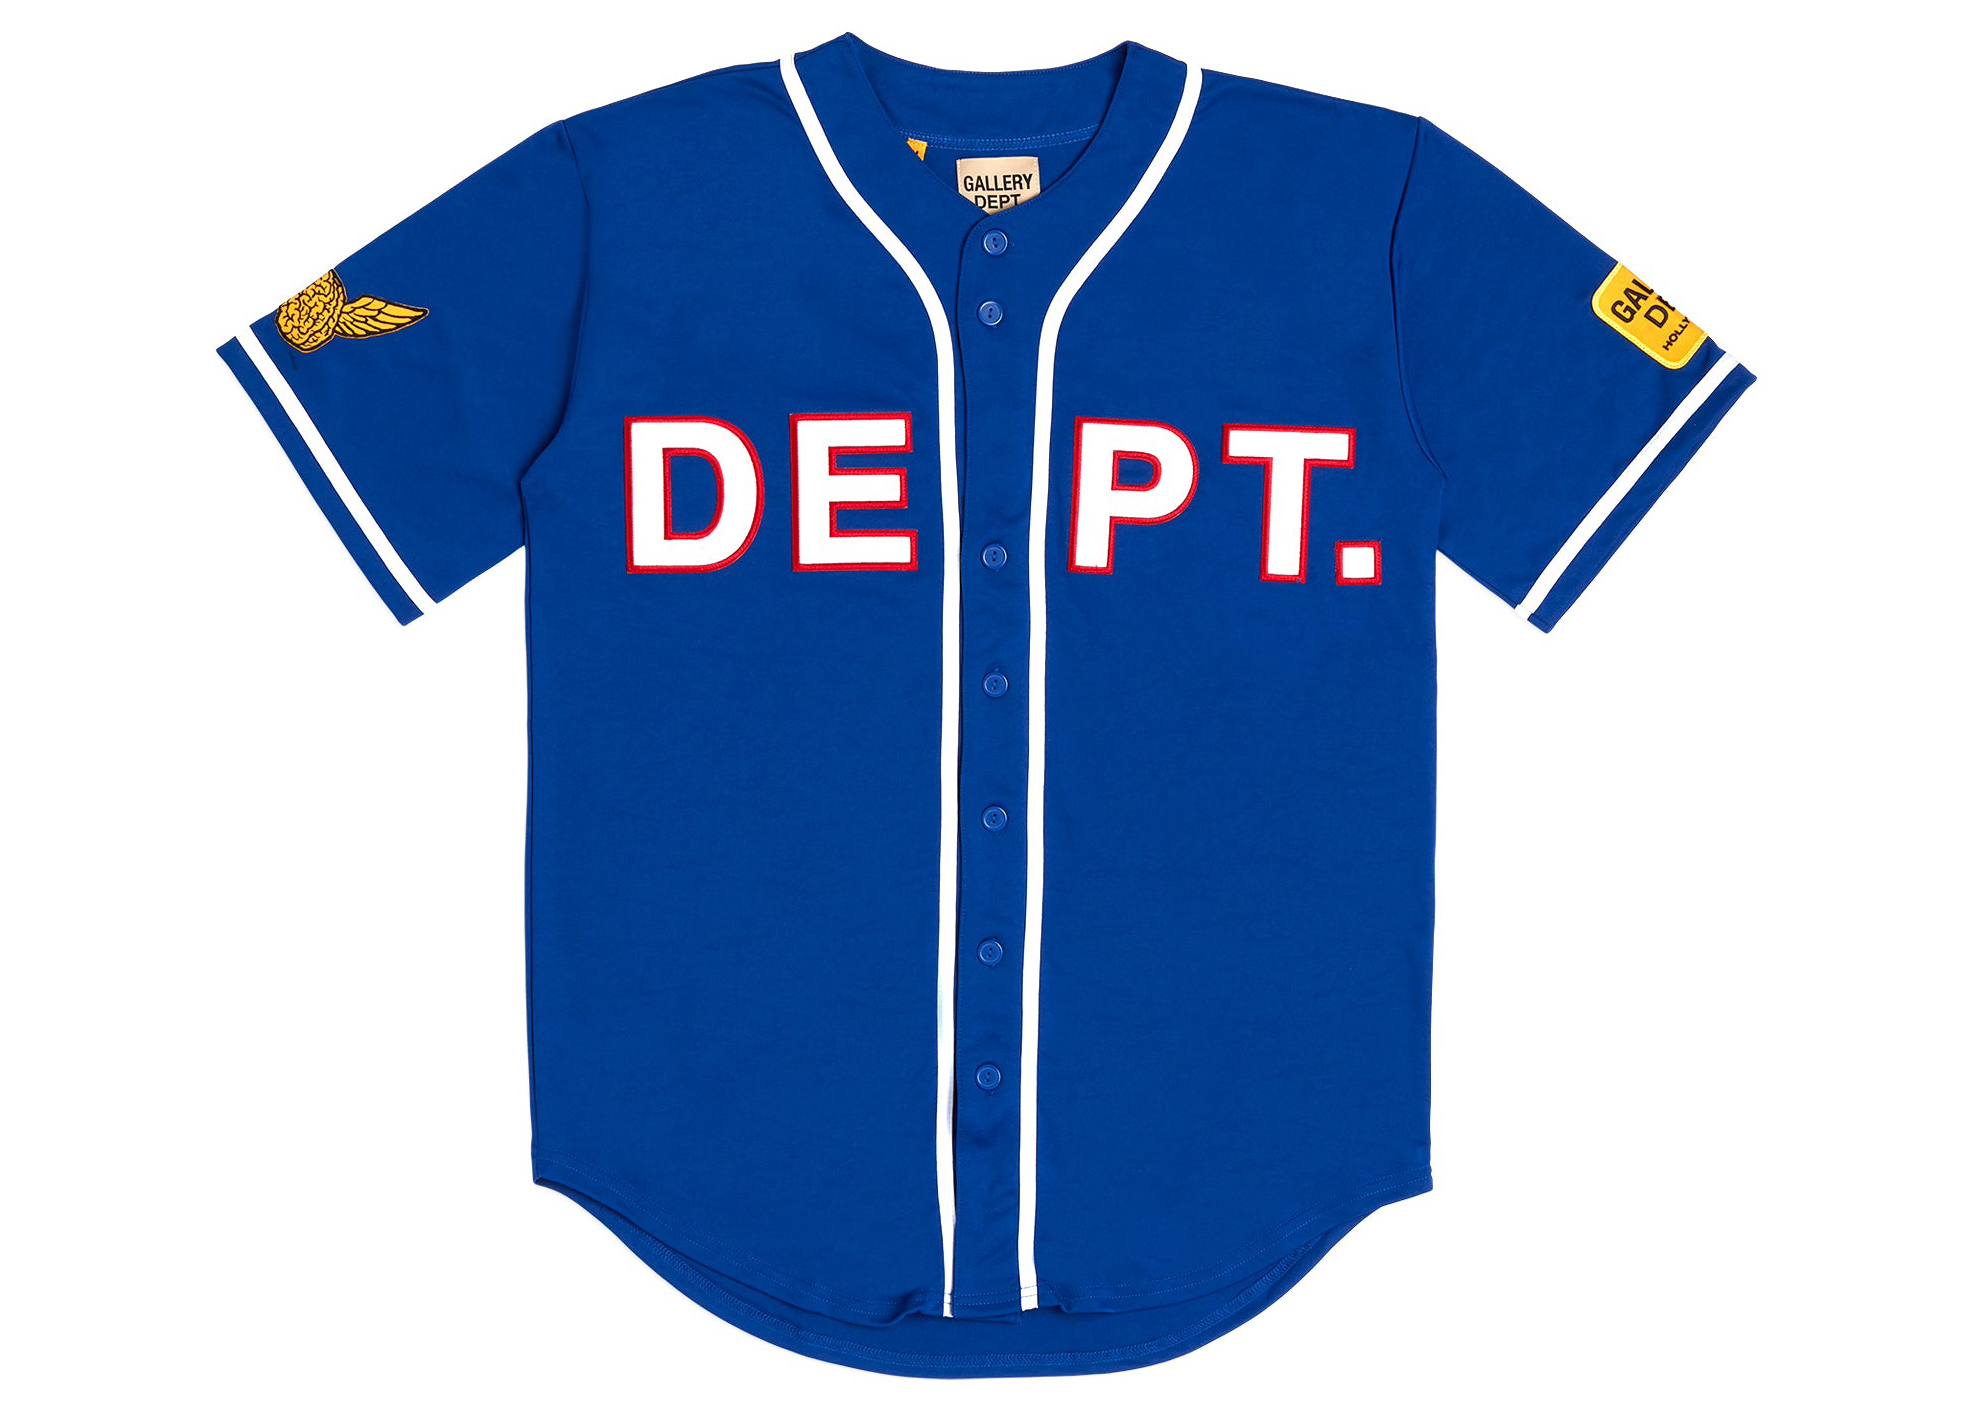 Gallery Dept. Echo Park Baseball Jersey Blue - SS22 Men's - US